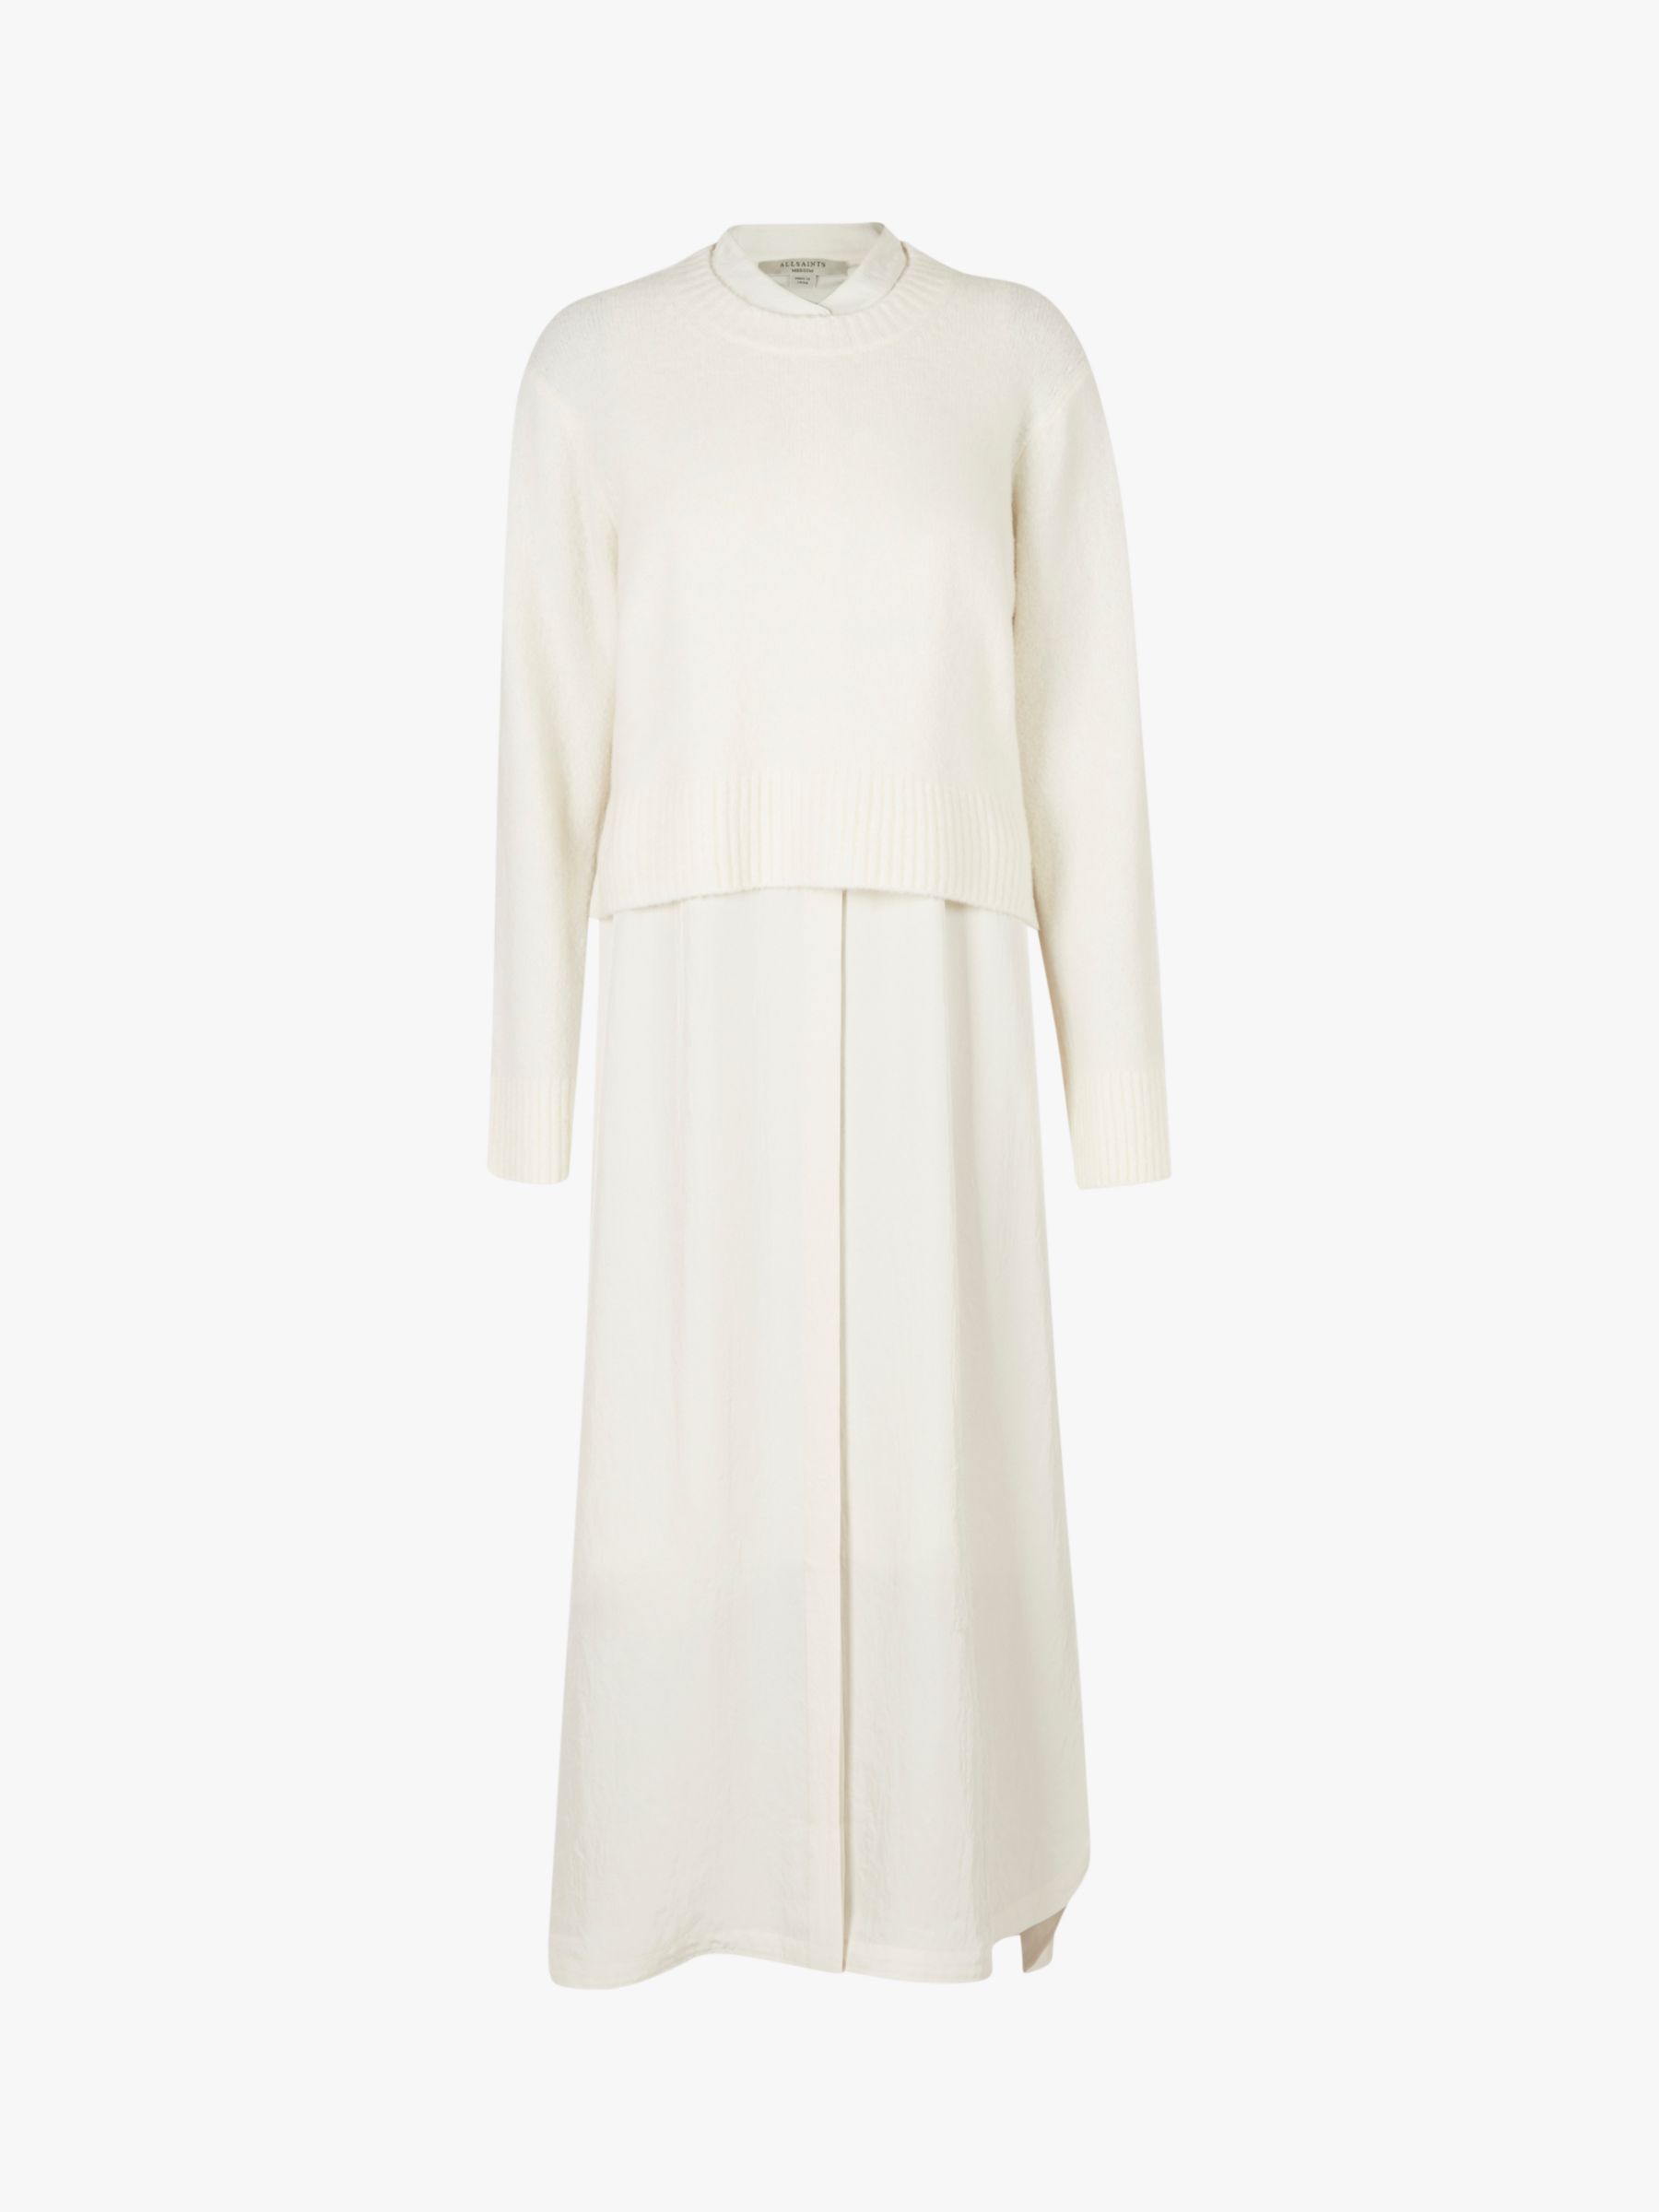 AllSaints Angelina 2-in-1 Button Dress, Chalk White